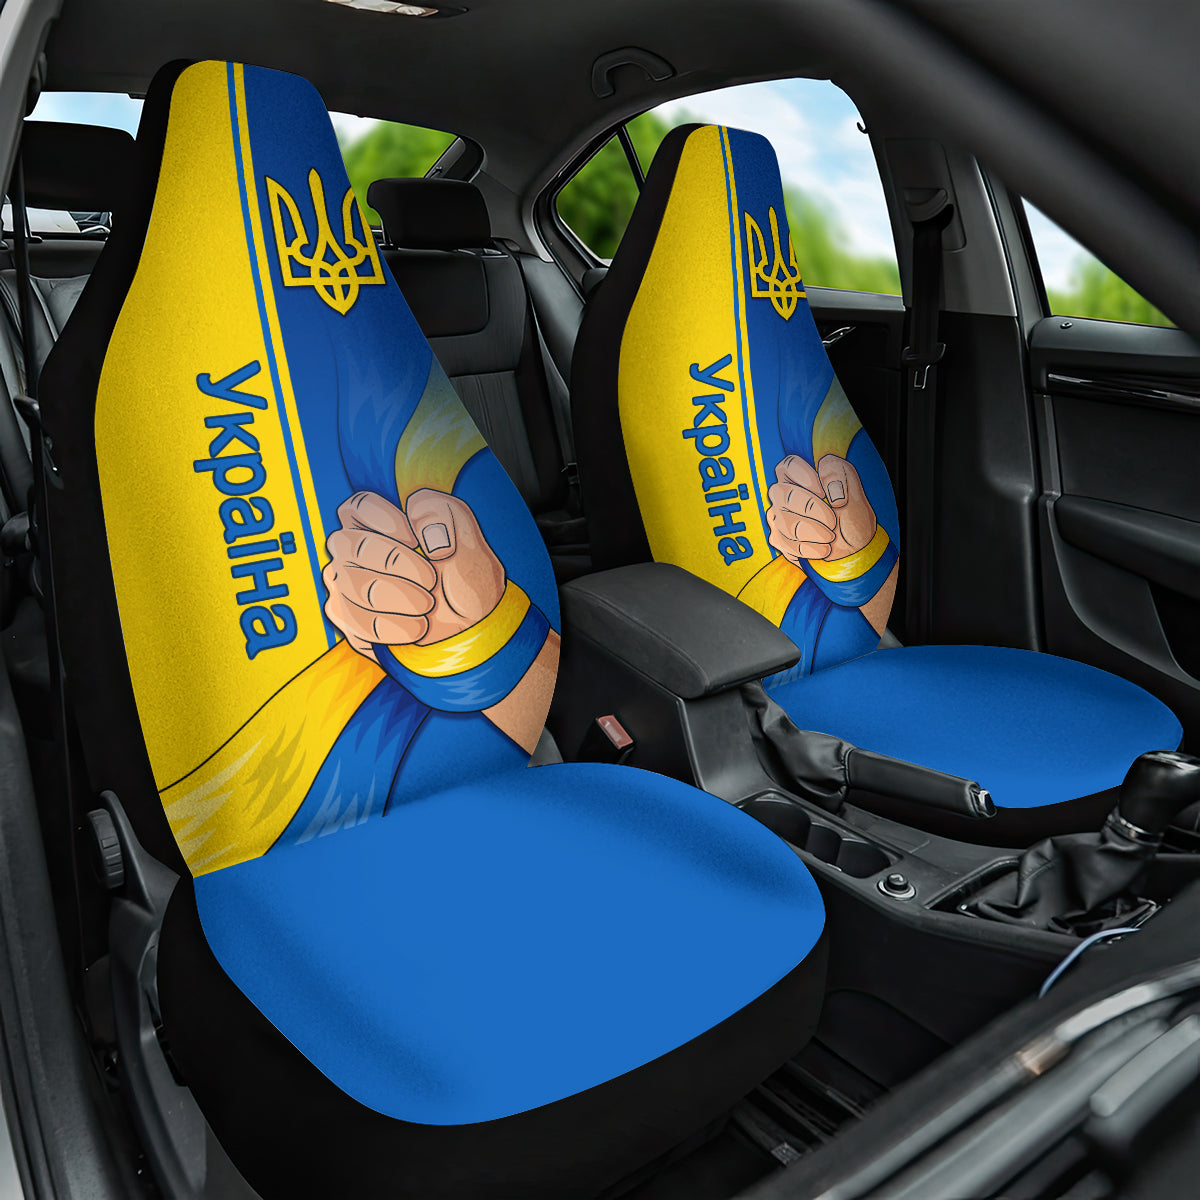 ukraine-unity-day-car-seat-cover-ukrainian-unification-act